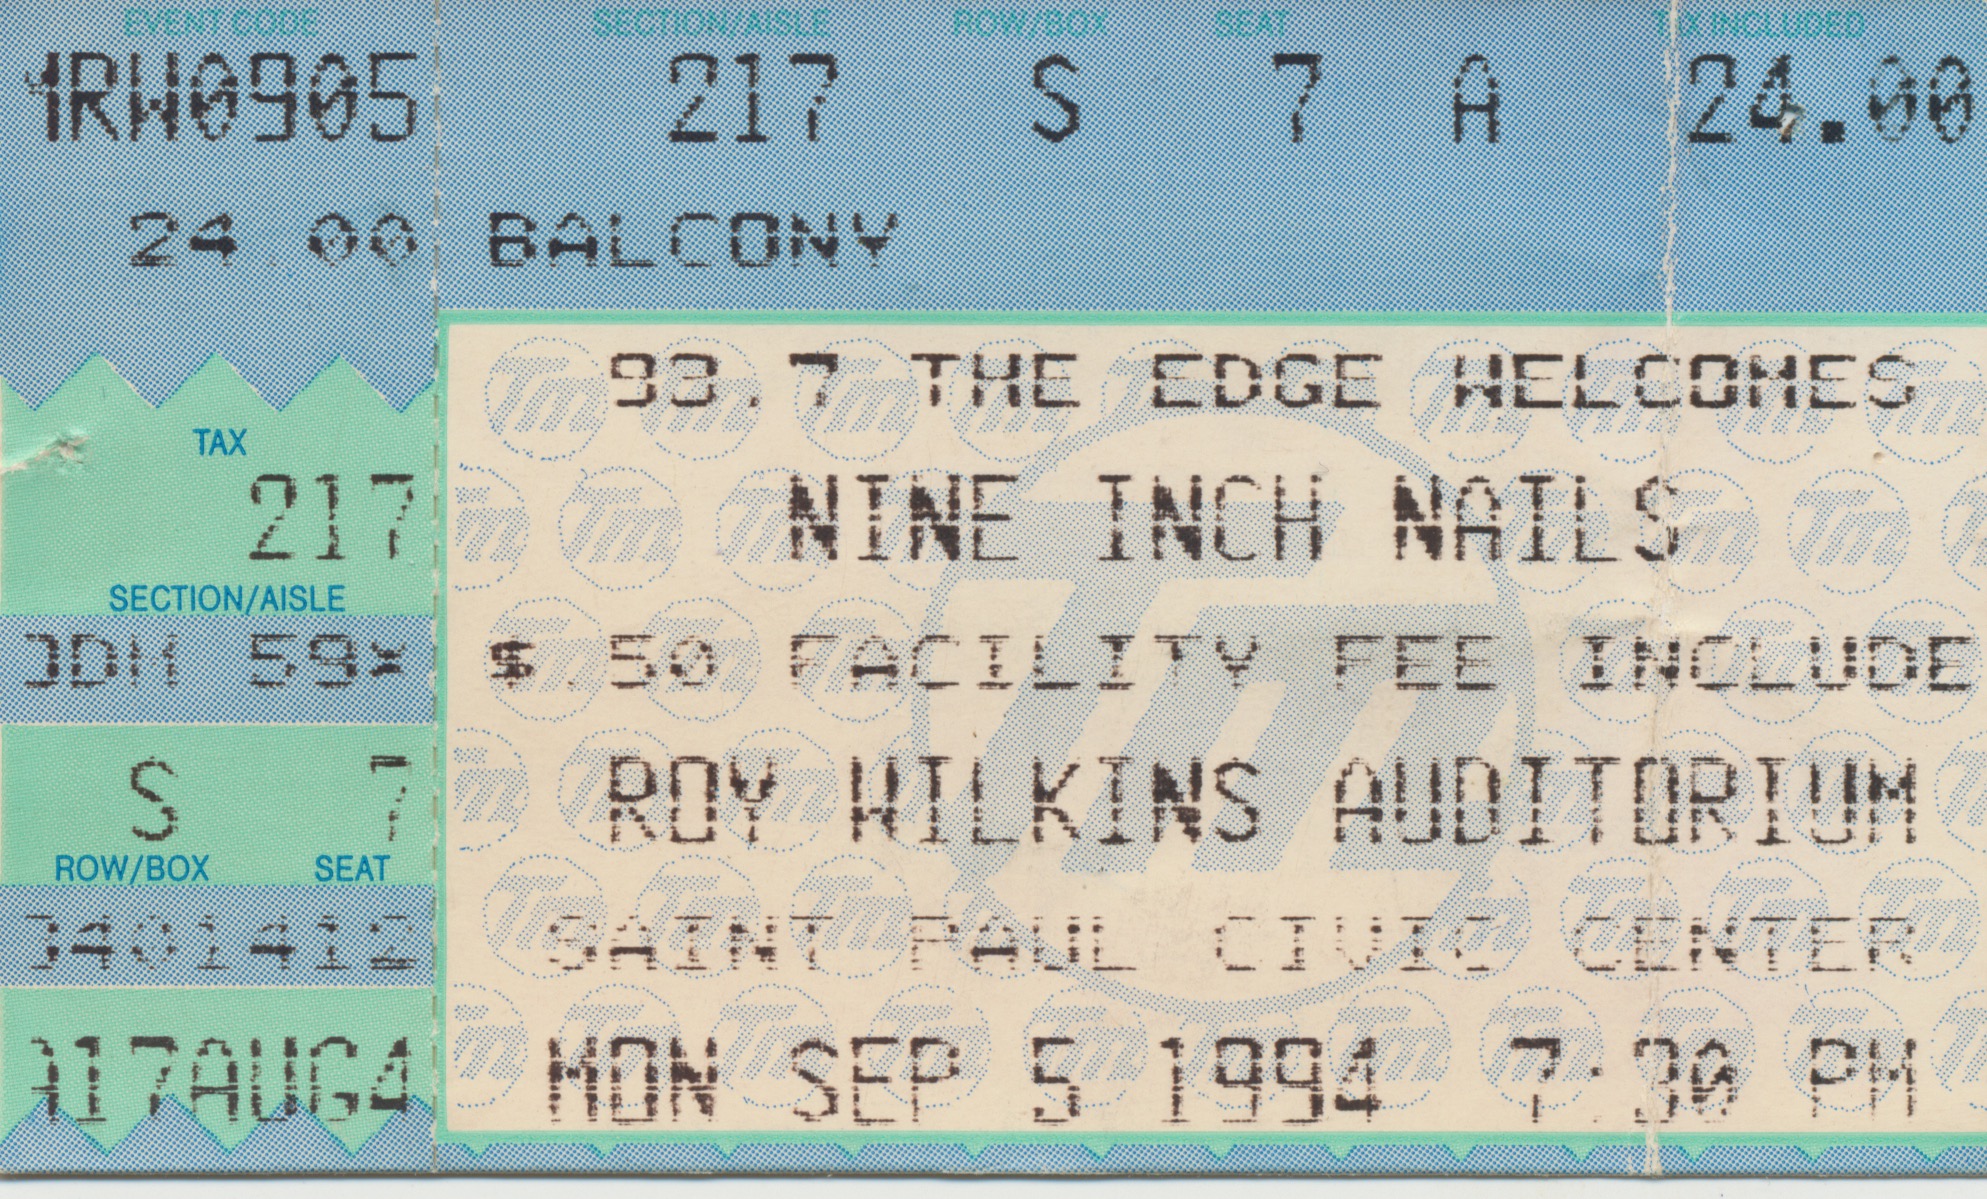 09/05/1994 ticket